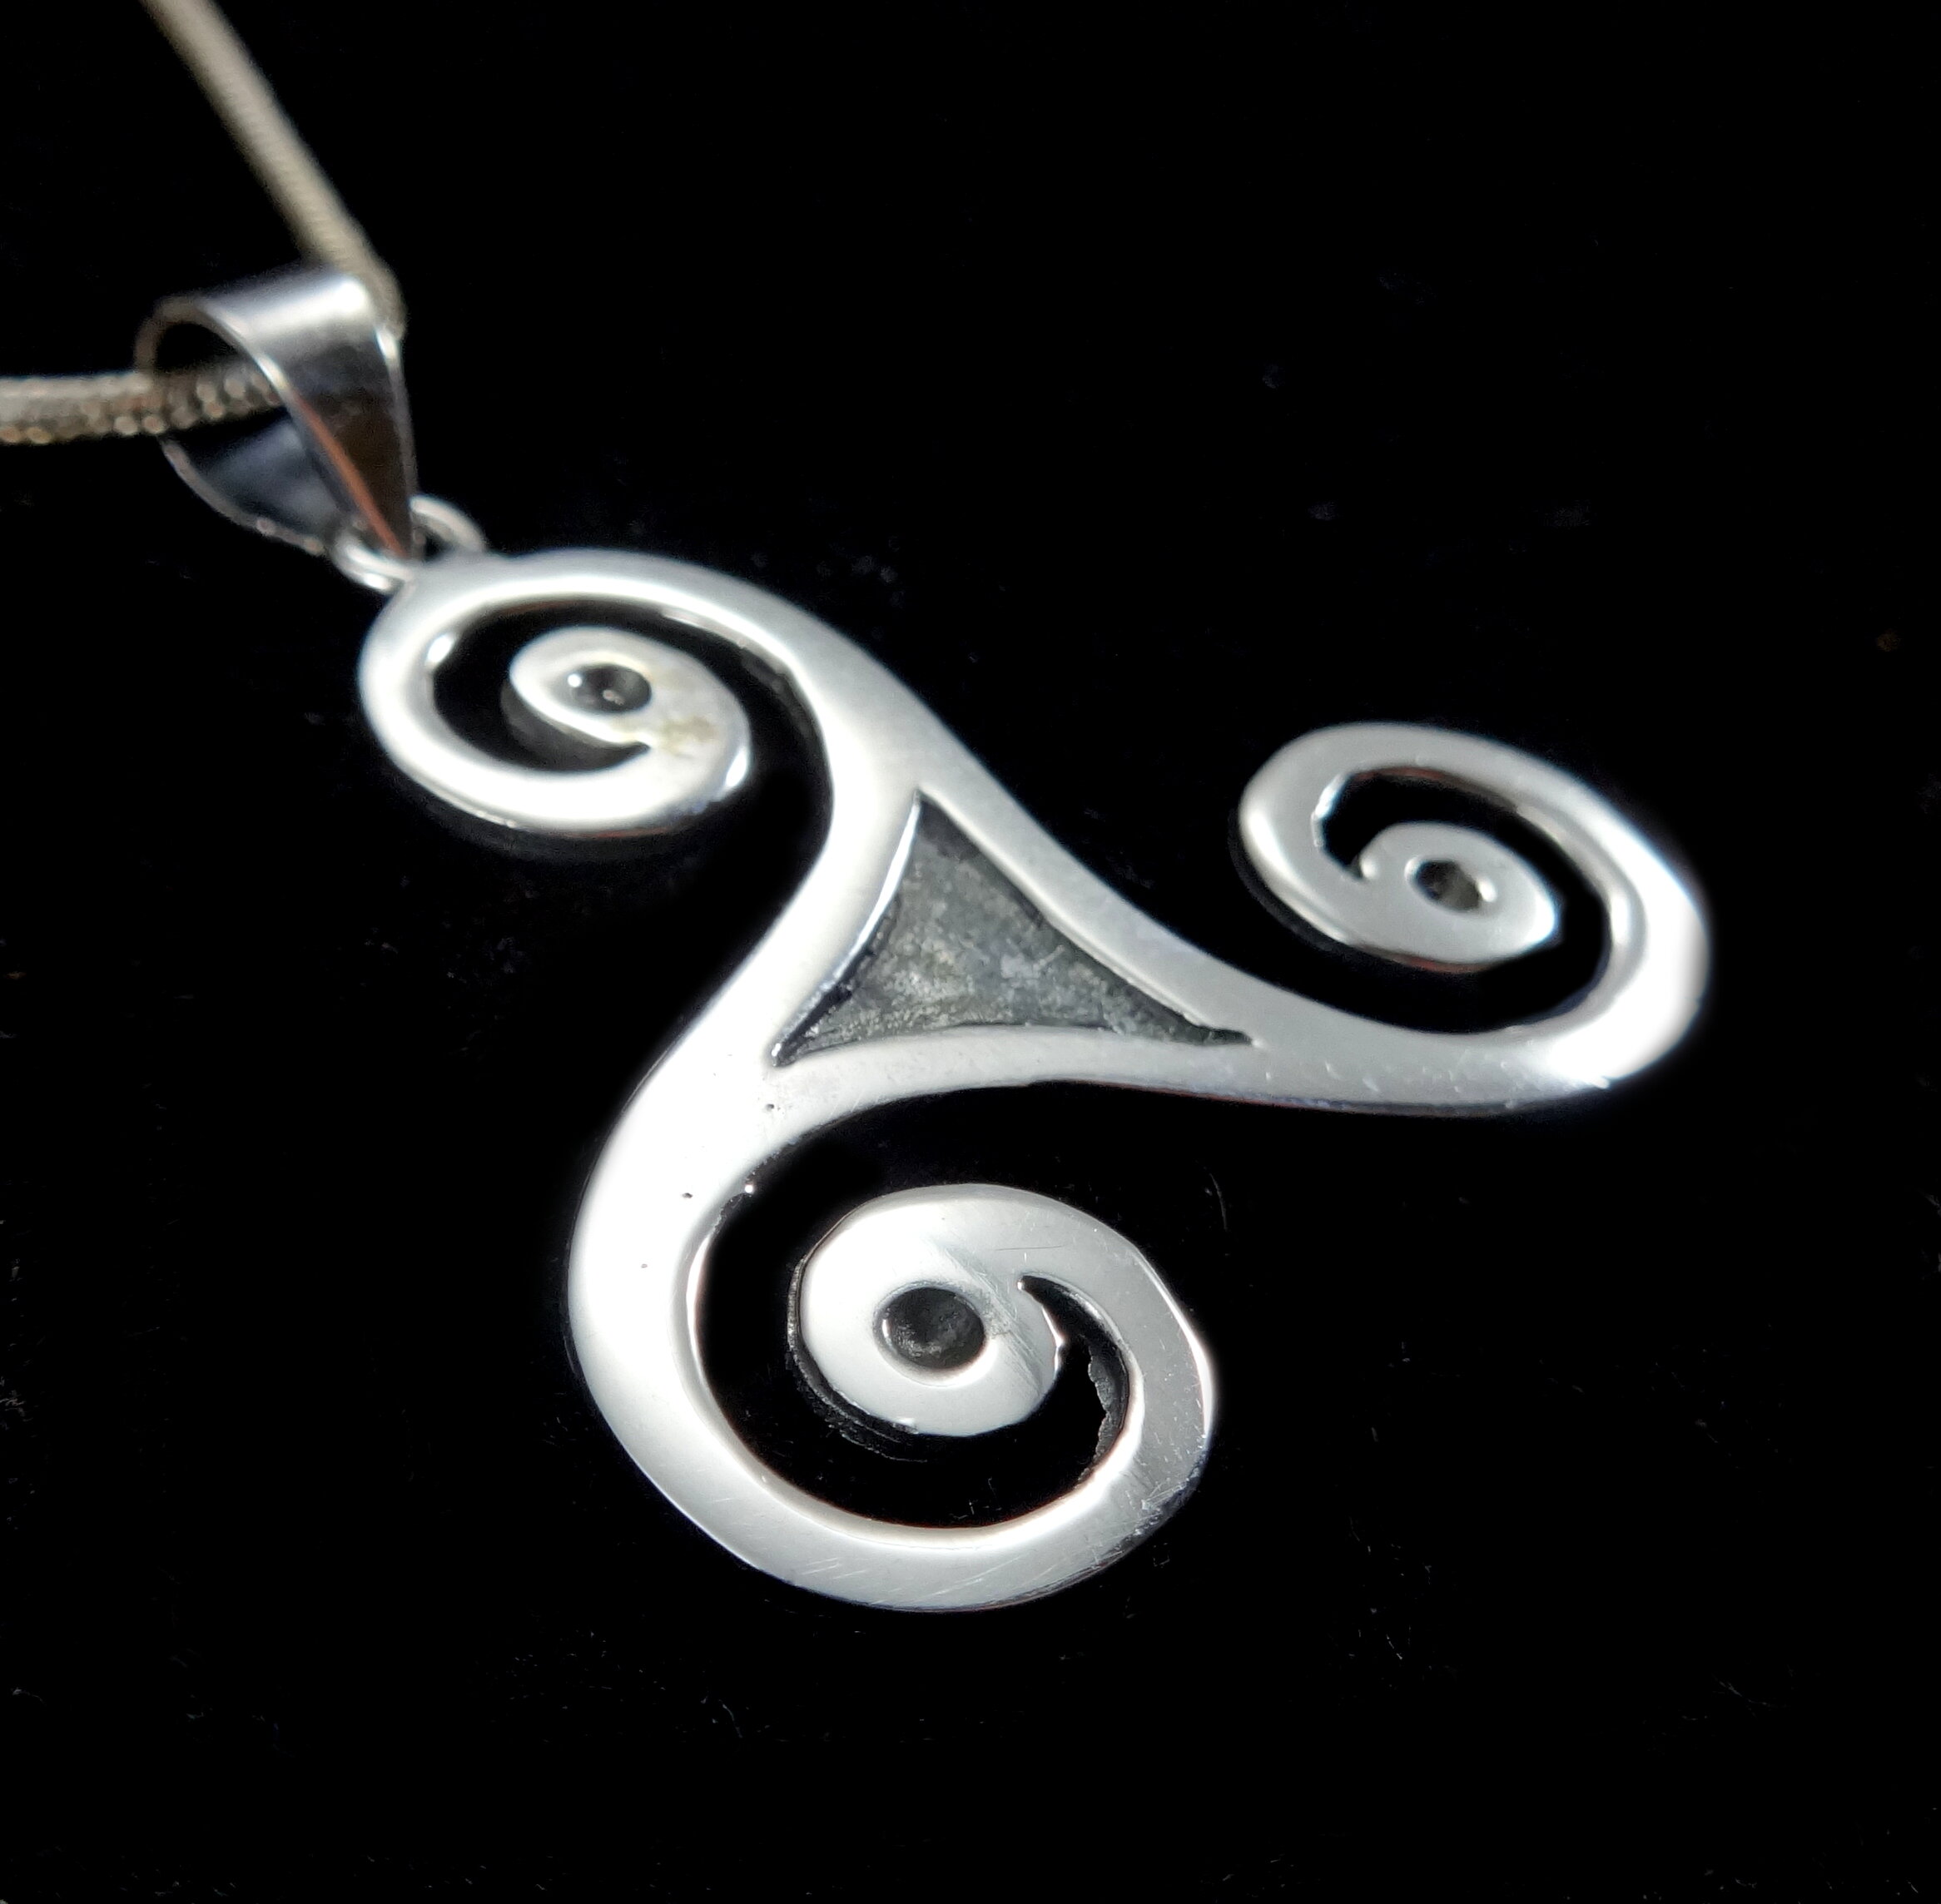 Sterling Silver Celtic Triskelion Triple Spiral Pendant — Renegade Jewelry